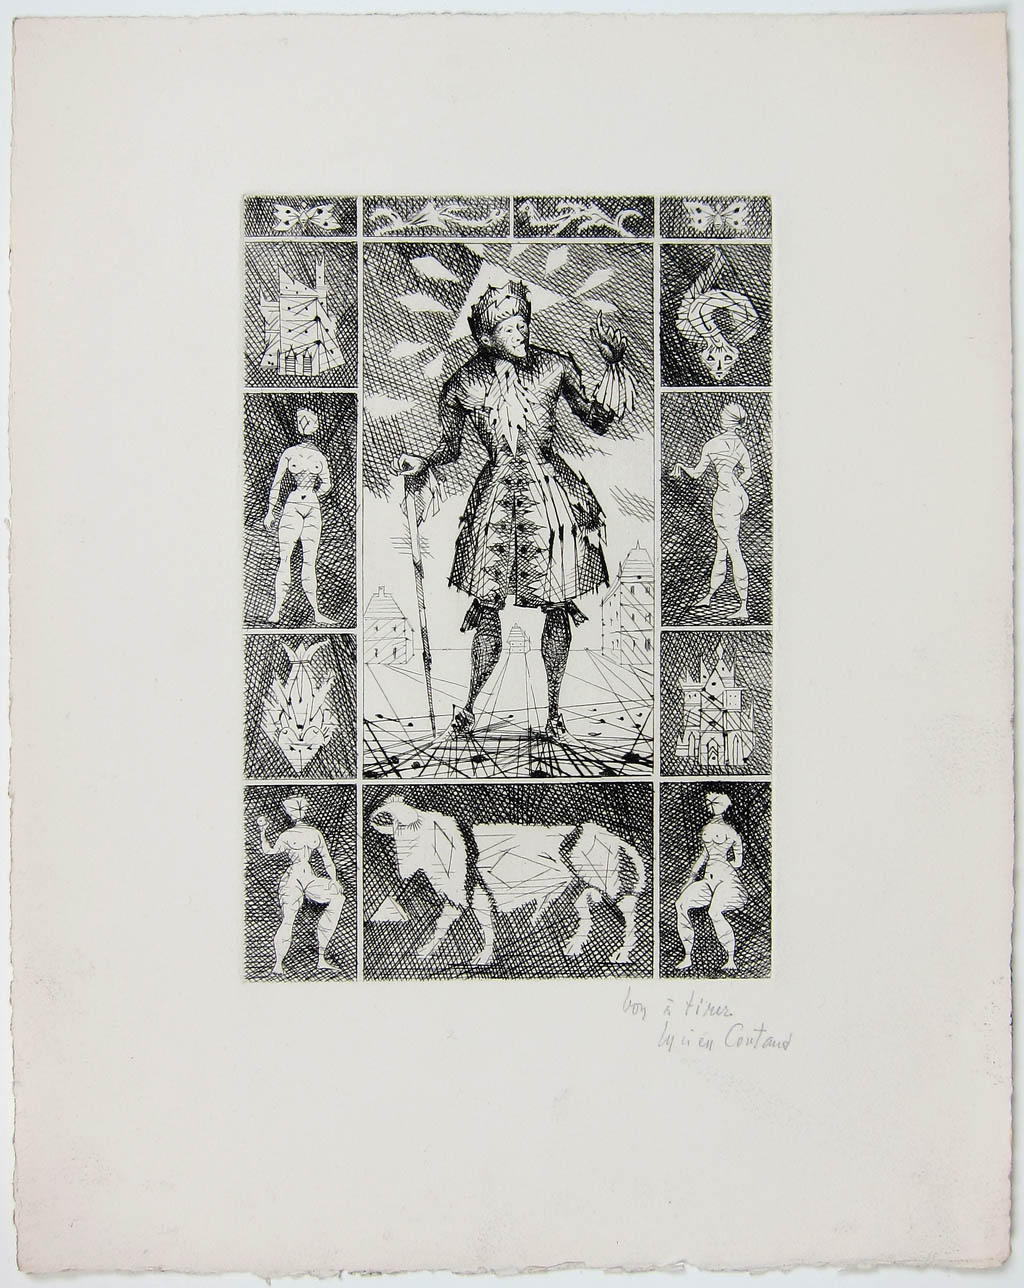 Lucien Coutaud - Le Taureau Blanc (Frontispiece) - 1956 etching